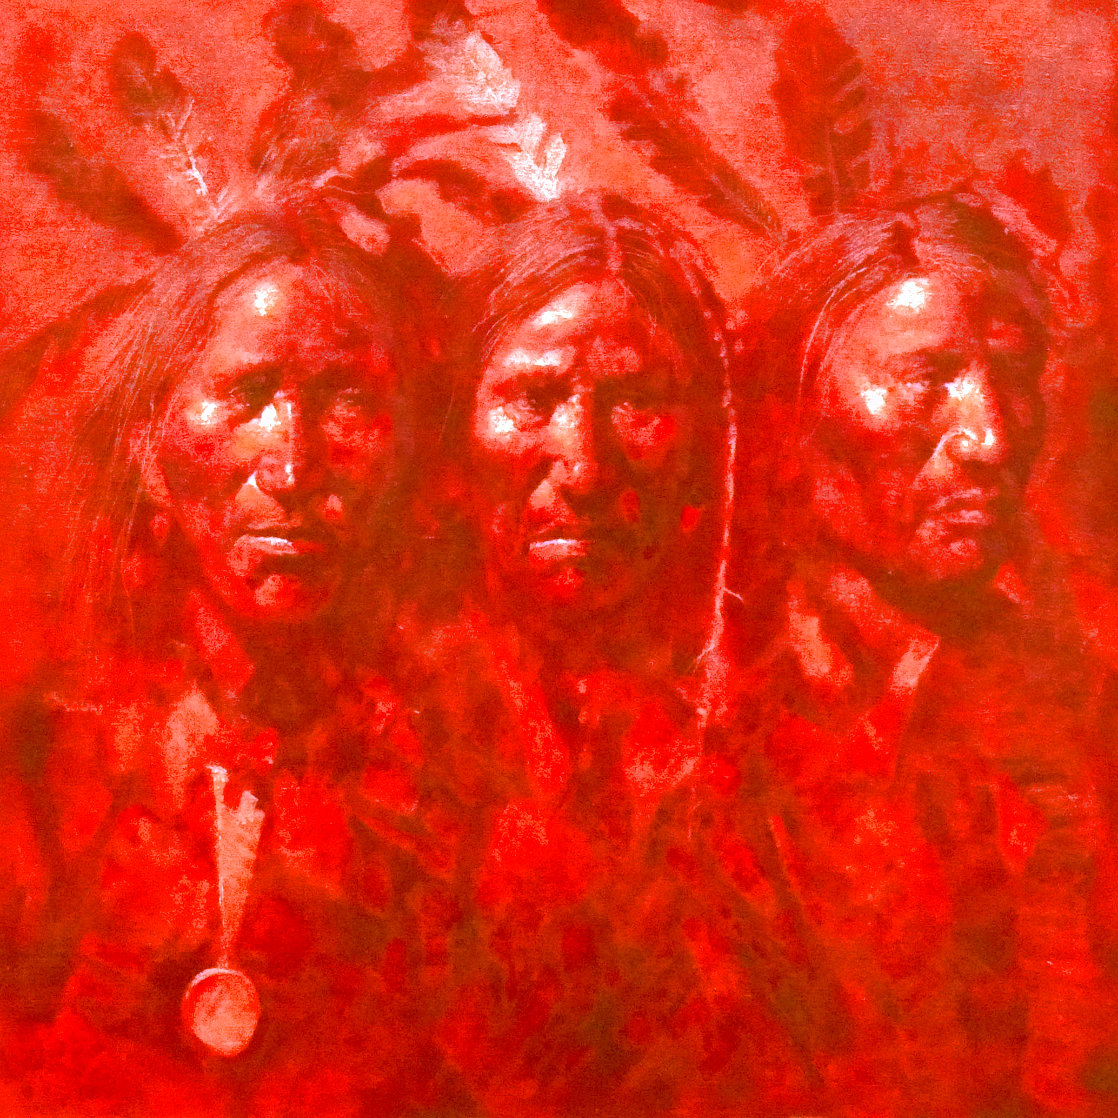 Untitled Native American Portrait 1970 42x42 - Huge Original Painting by Jorge  Tarallo Braun